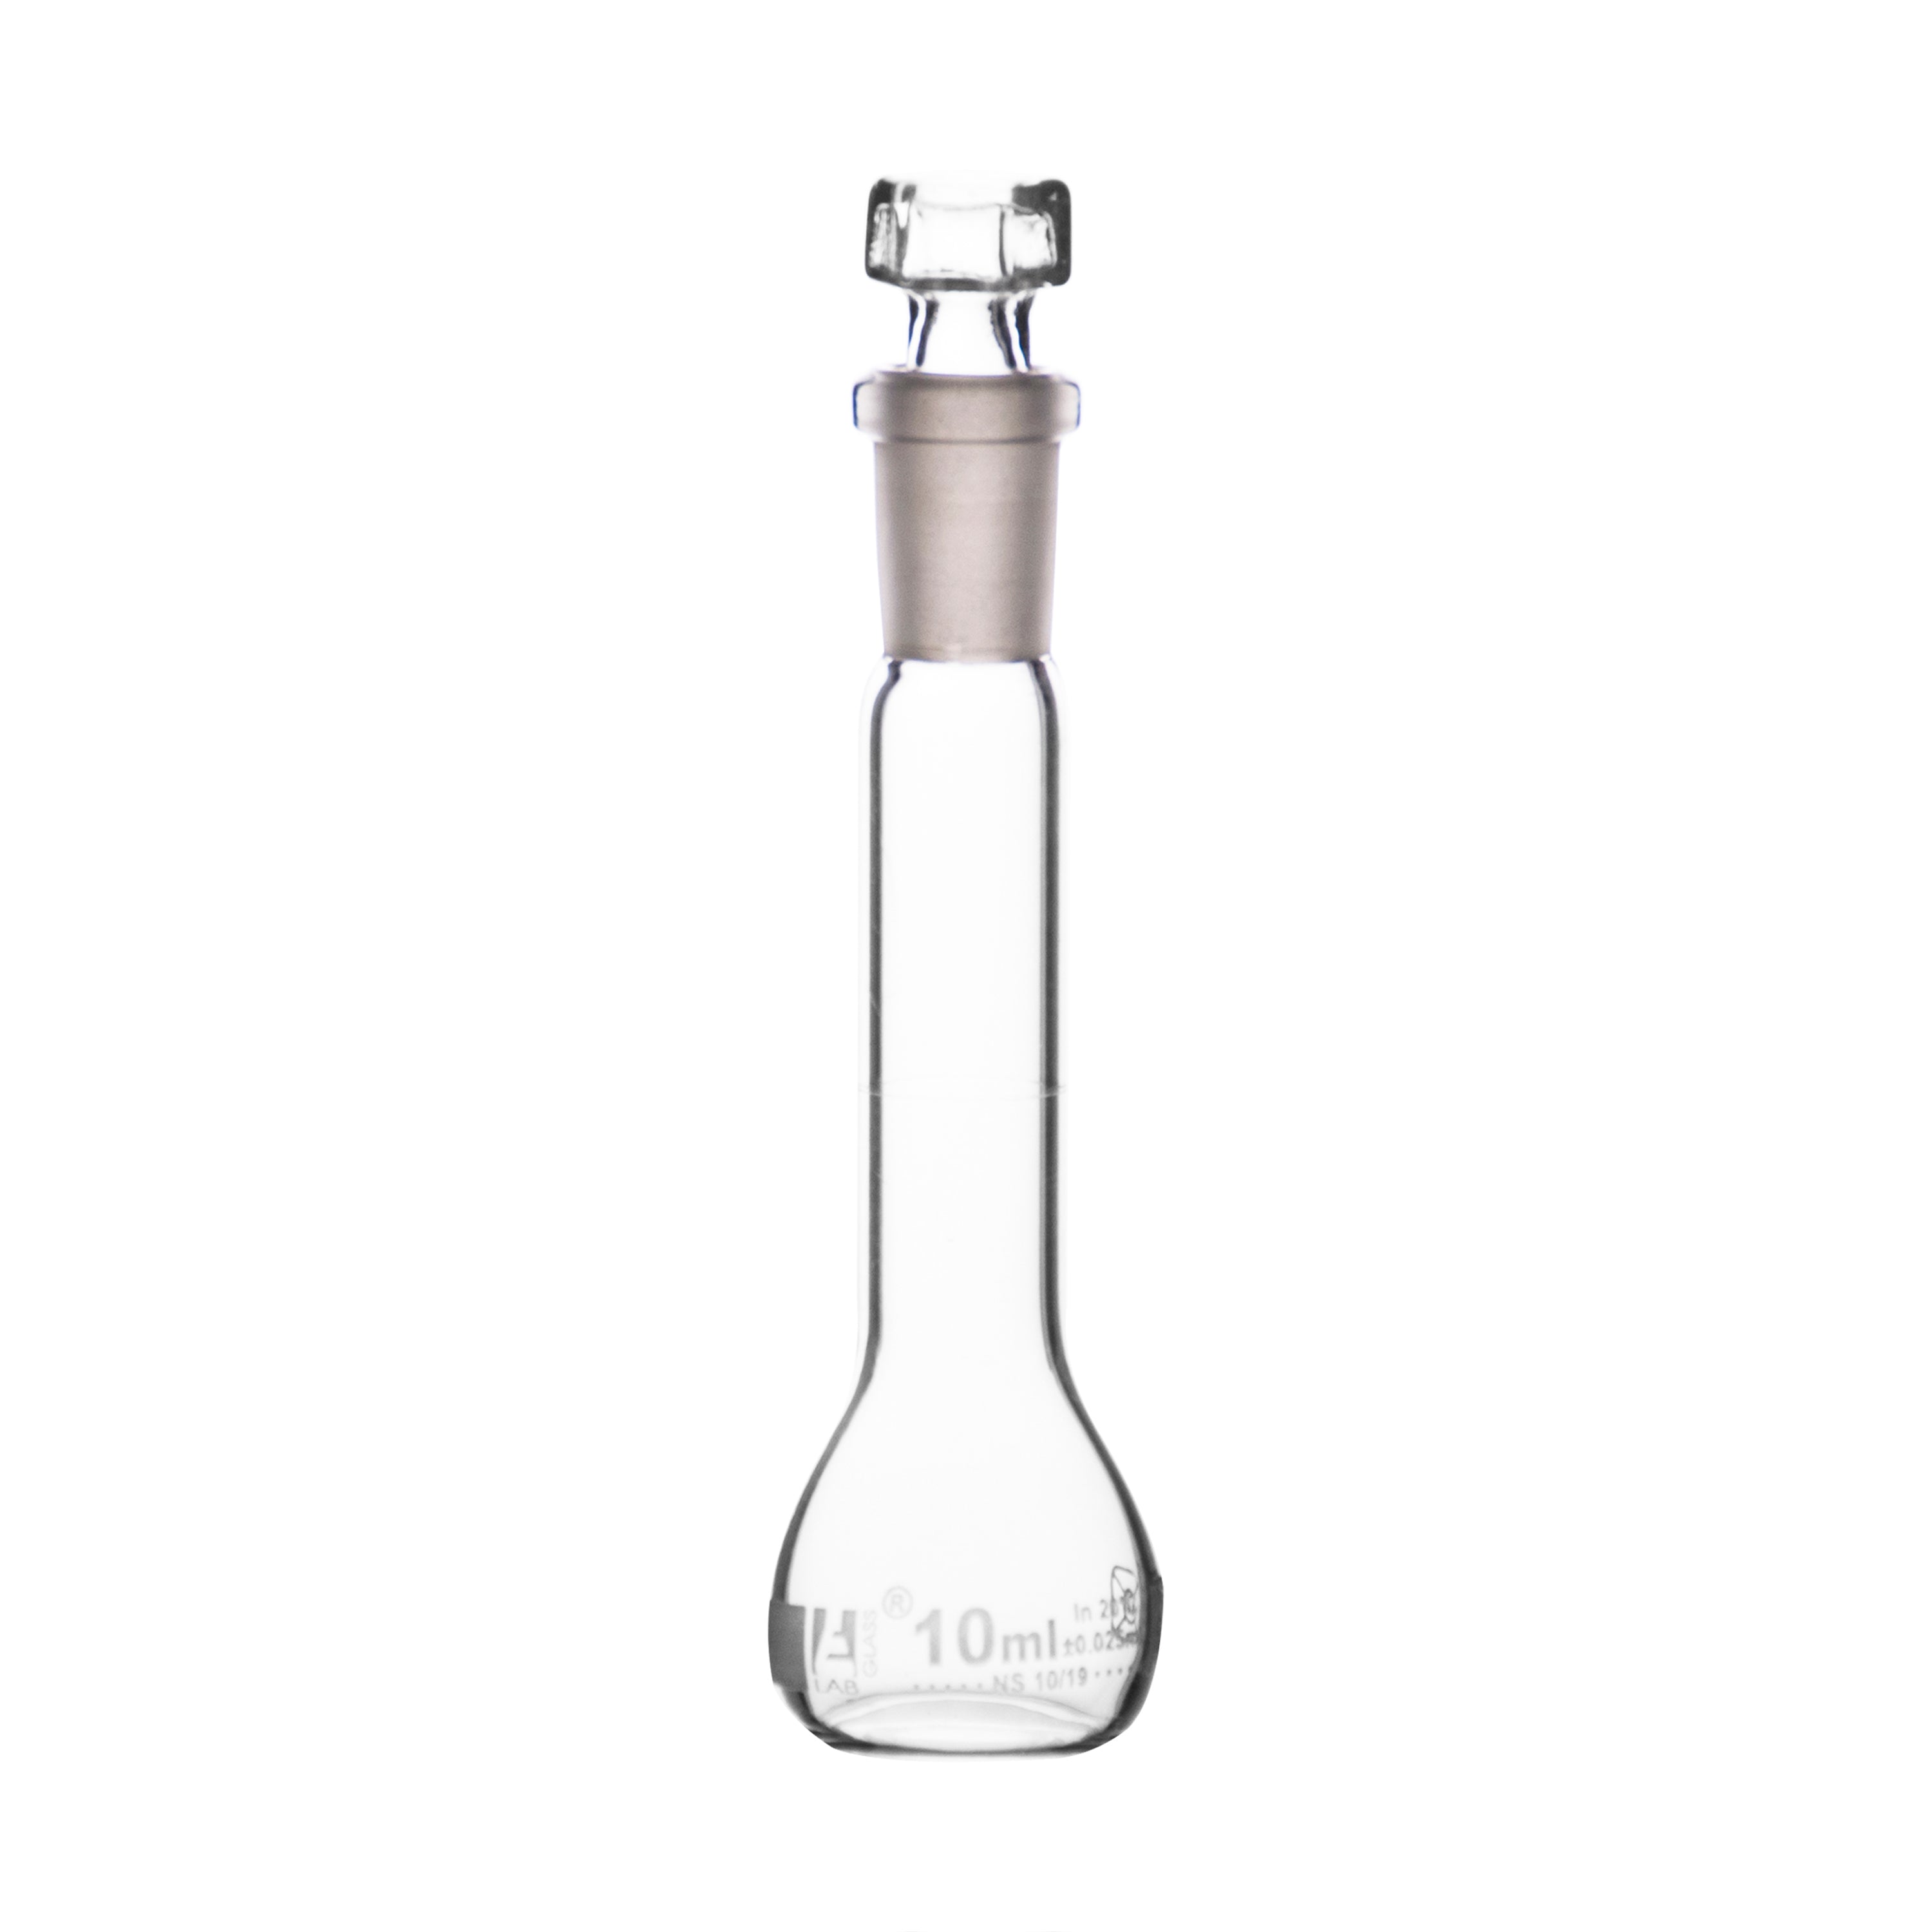 Borosilicate Volumetric Flask with Hollow Glass Stopper, 10ml, Class B, White Print, Autoclavable